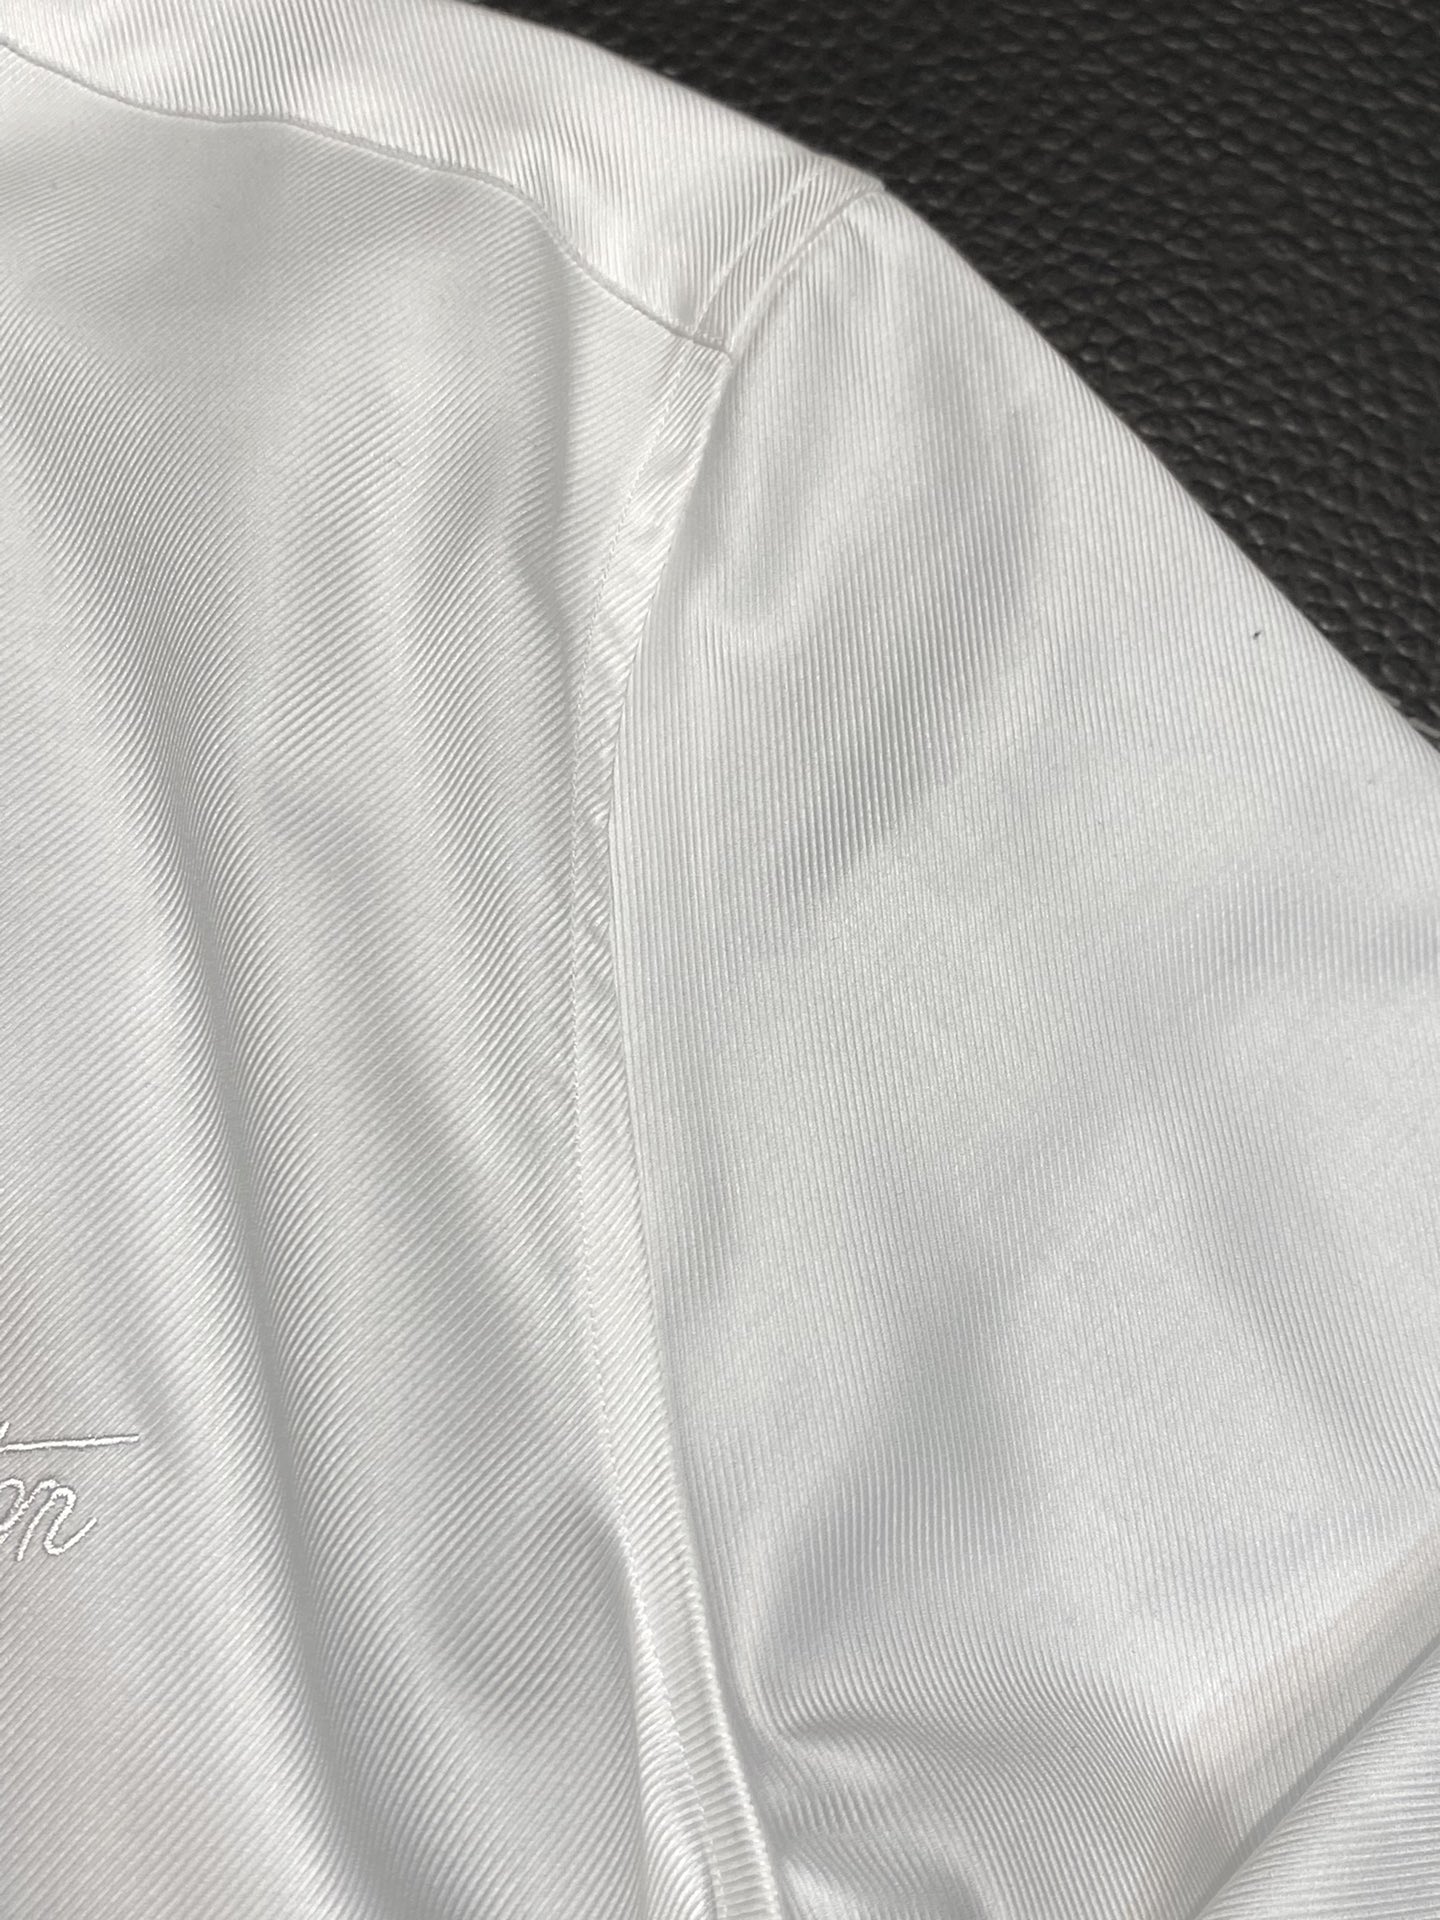 LV路易威登独家专供新款原单男士休闲Polo衬衫高端定制高版本时尚百搭爆款️️进口面料手感超柔软细腻穿着